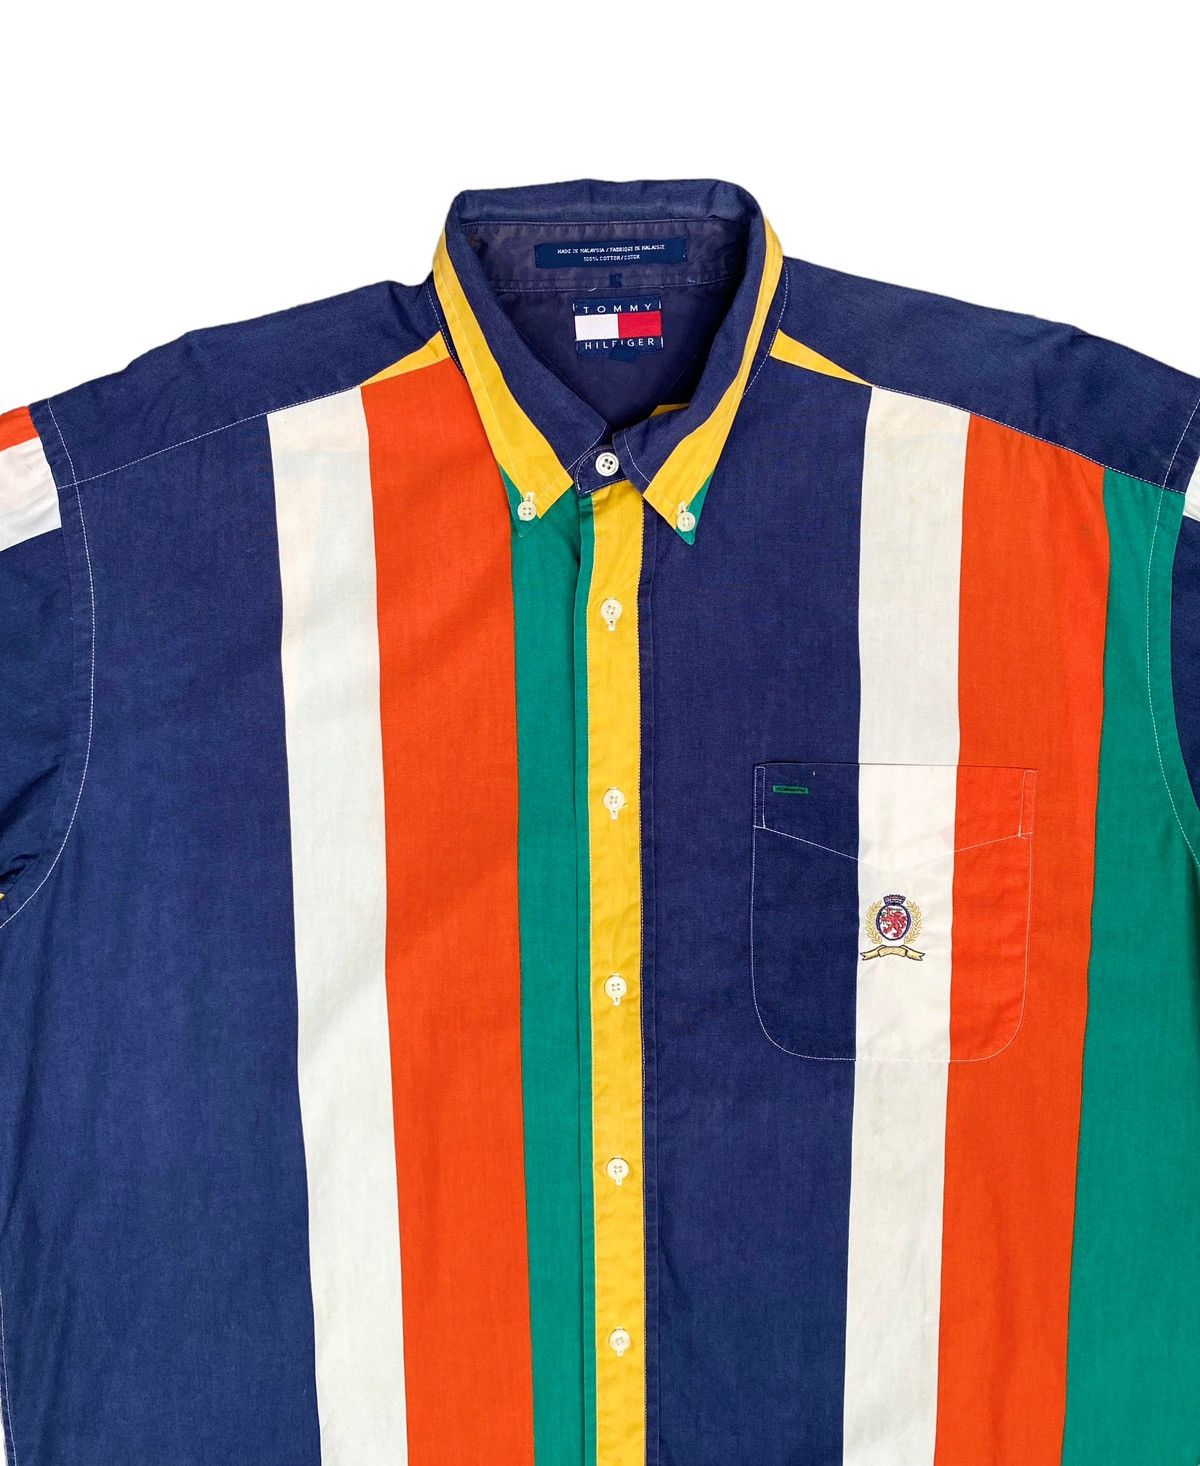 Vintage Rare Design Vintage Brand Tommy Hilfiger Stripe Shirt 1990s Size US L / EU 52-54 / 3 - 3 Thumbnail